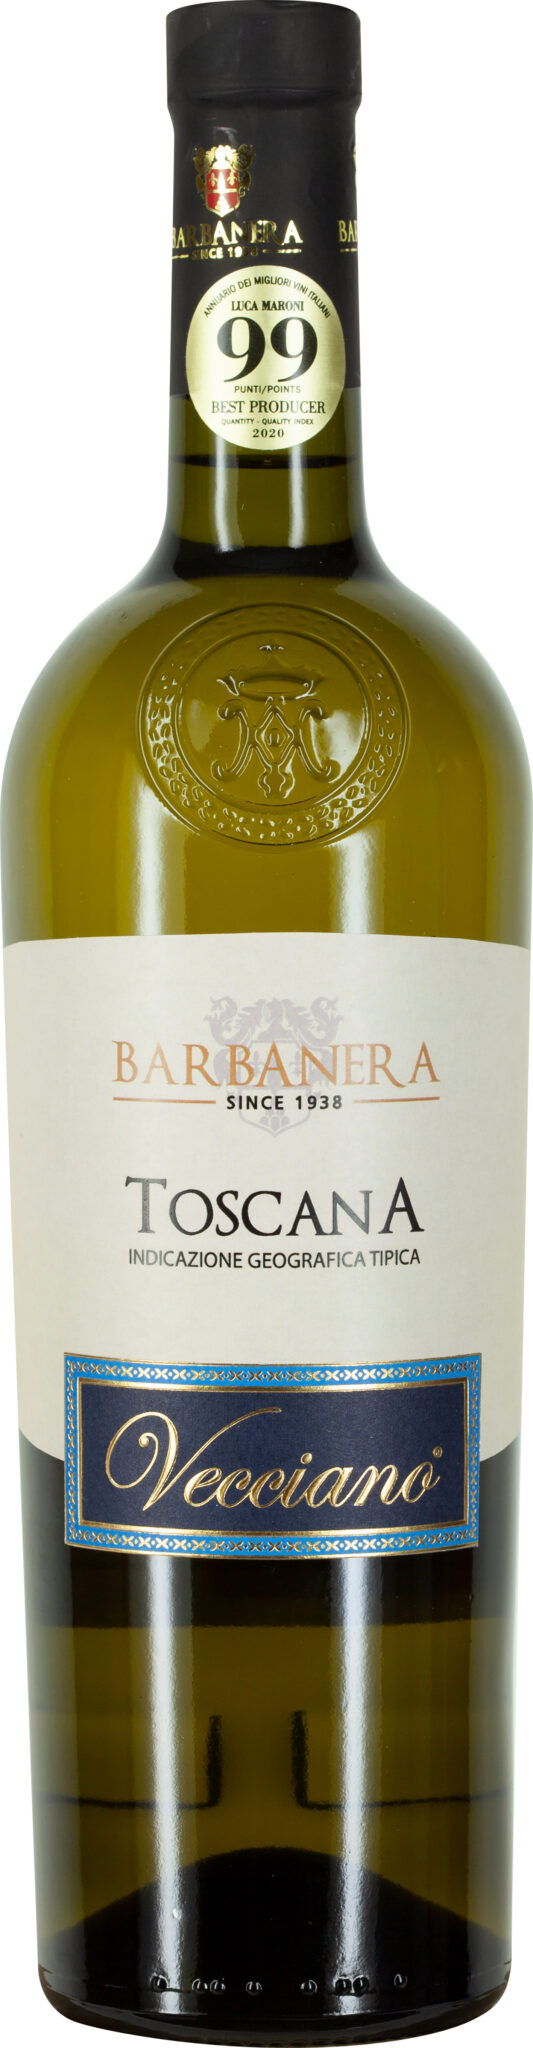 Barbanera Vecciano IGT, Bianco Toscana bestellen Weißwein